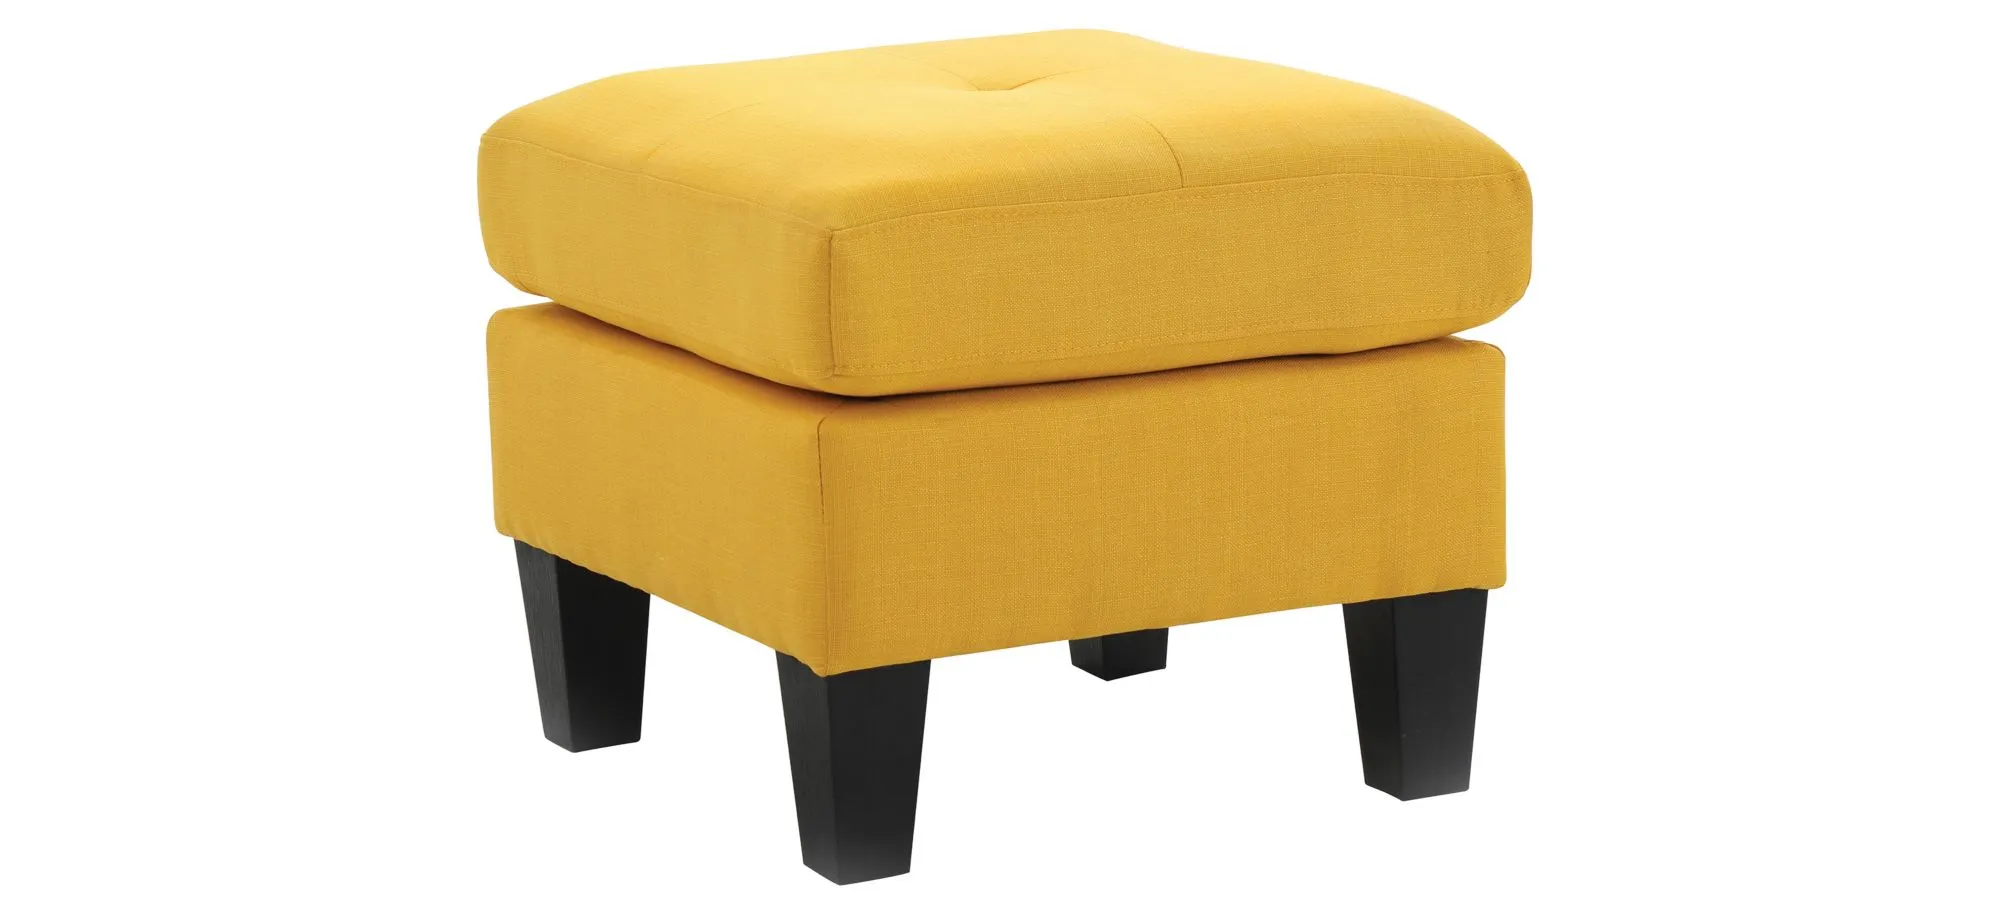 Newbury Ottoman by Glory Furniture in Yellow by Glory Furniture